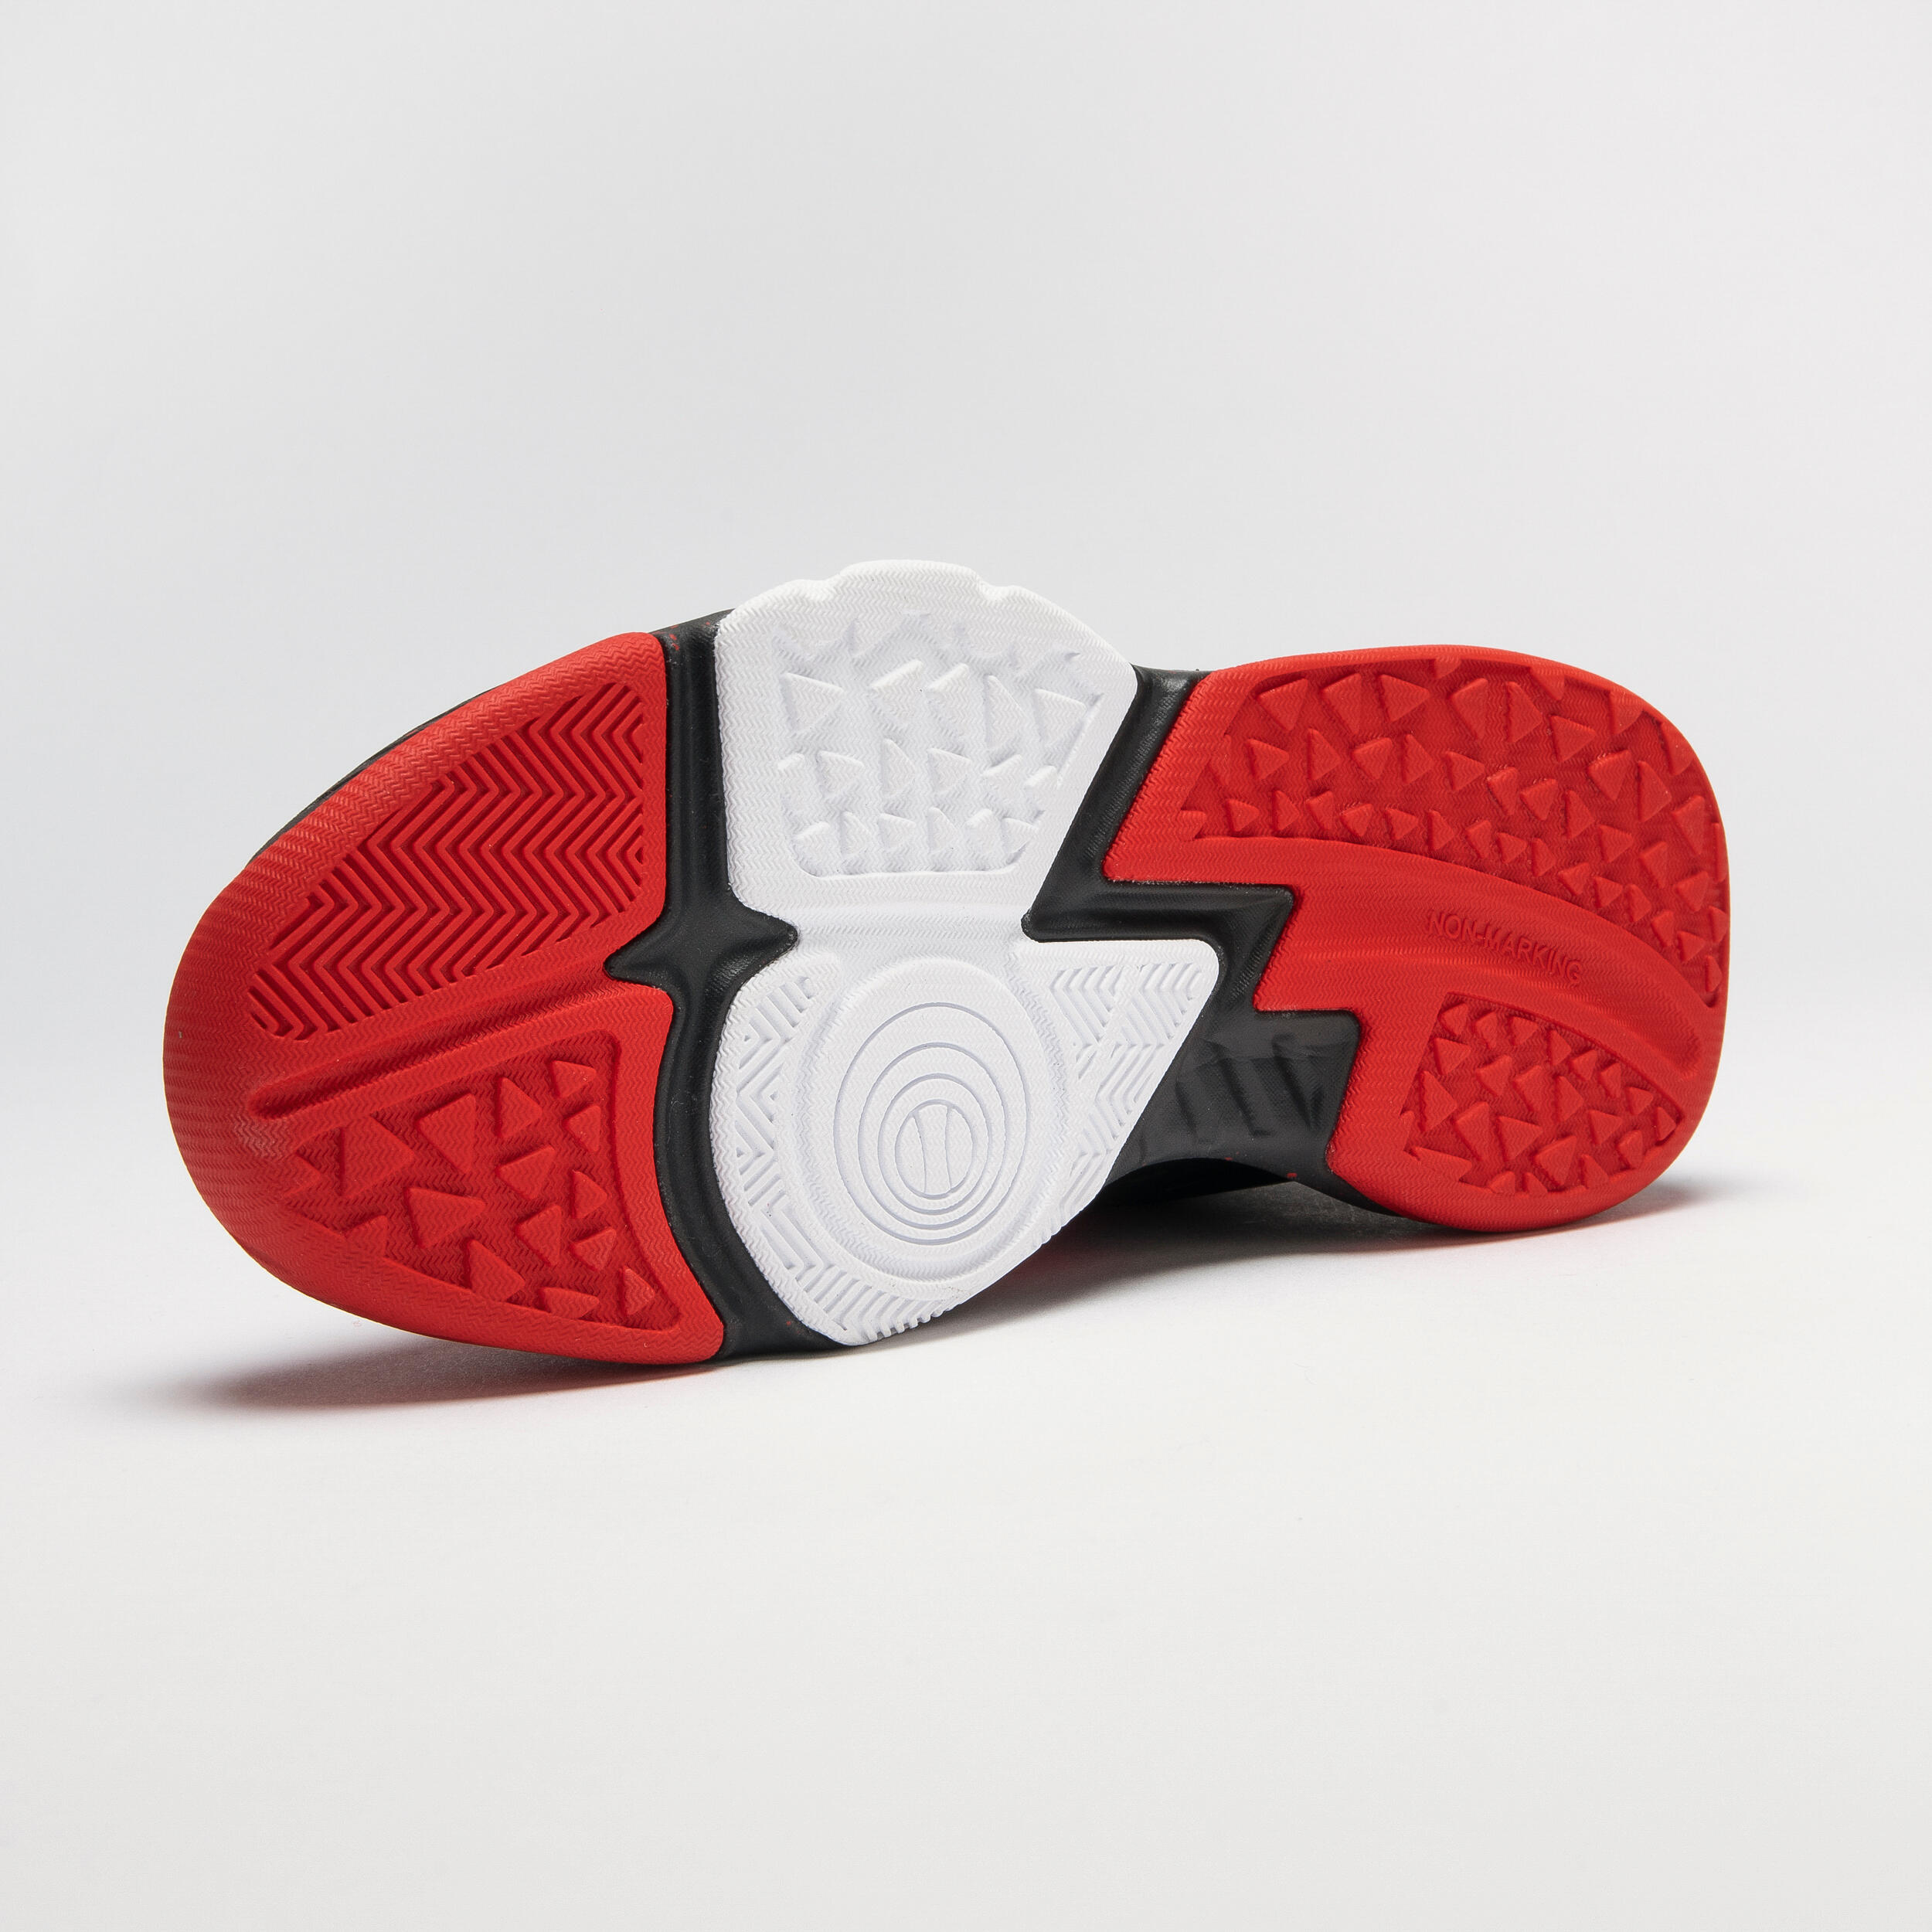 Kids' Intermediate Basketball Shoes - SS 500 Red - TARMAK